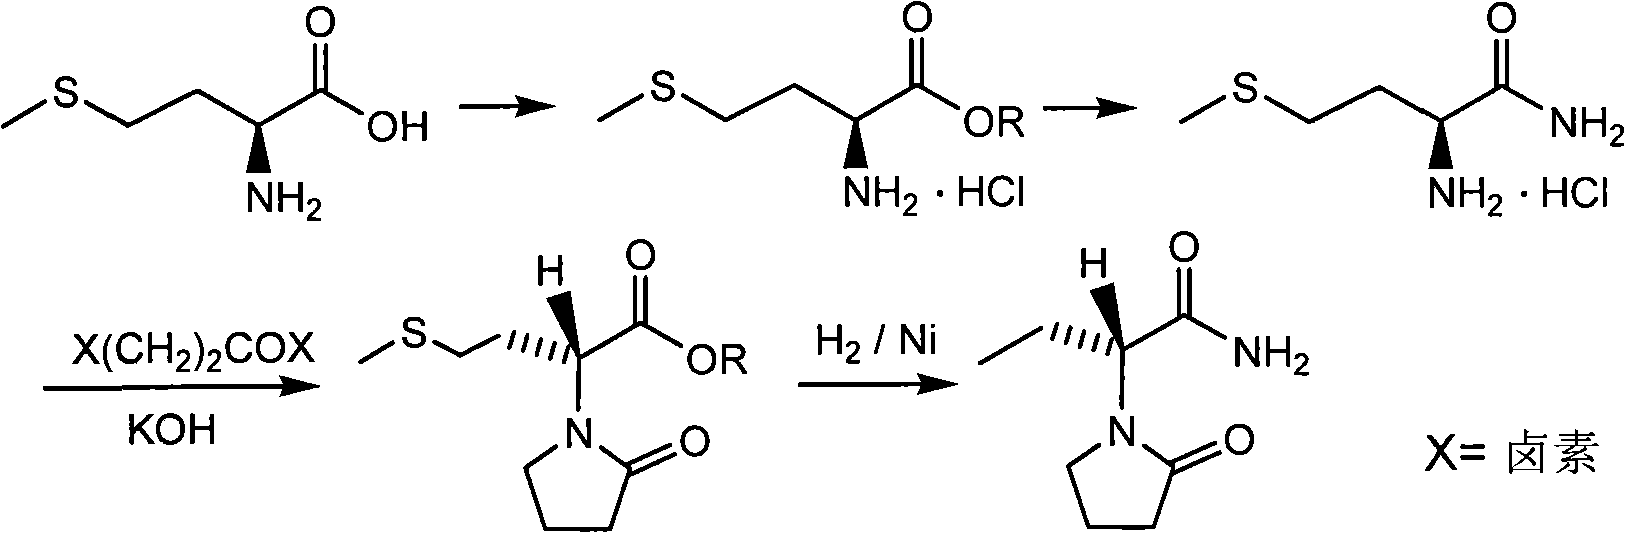 Novel method for preparing levetiracetam midbody S-(+)-2-aminobutyrate hydrochlorate